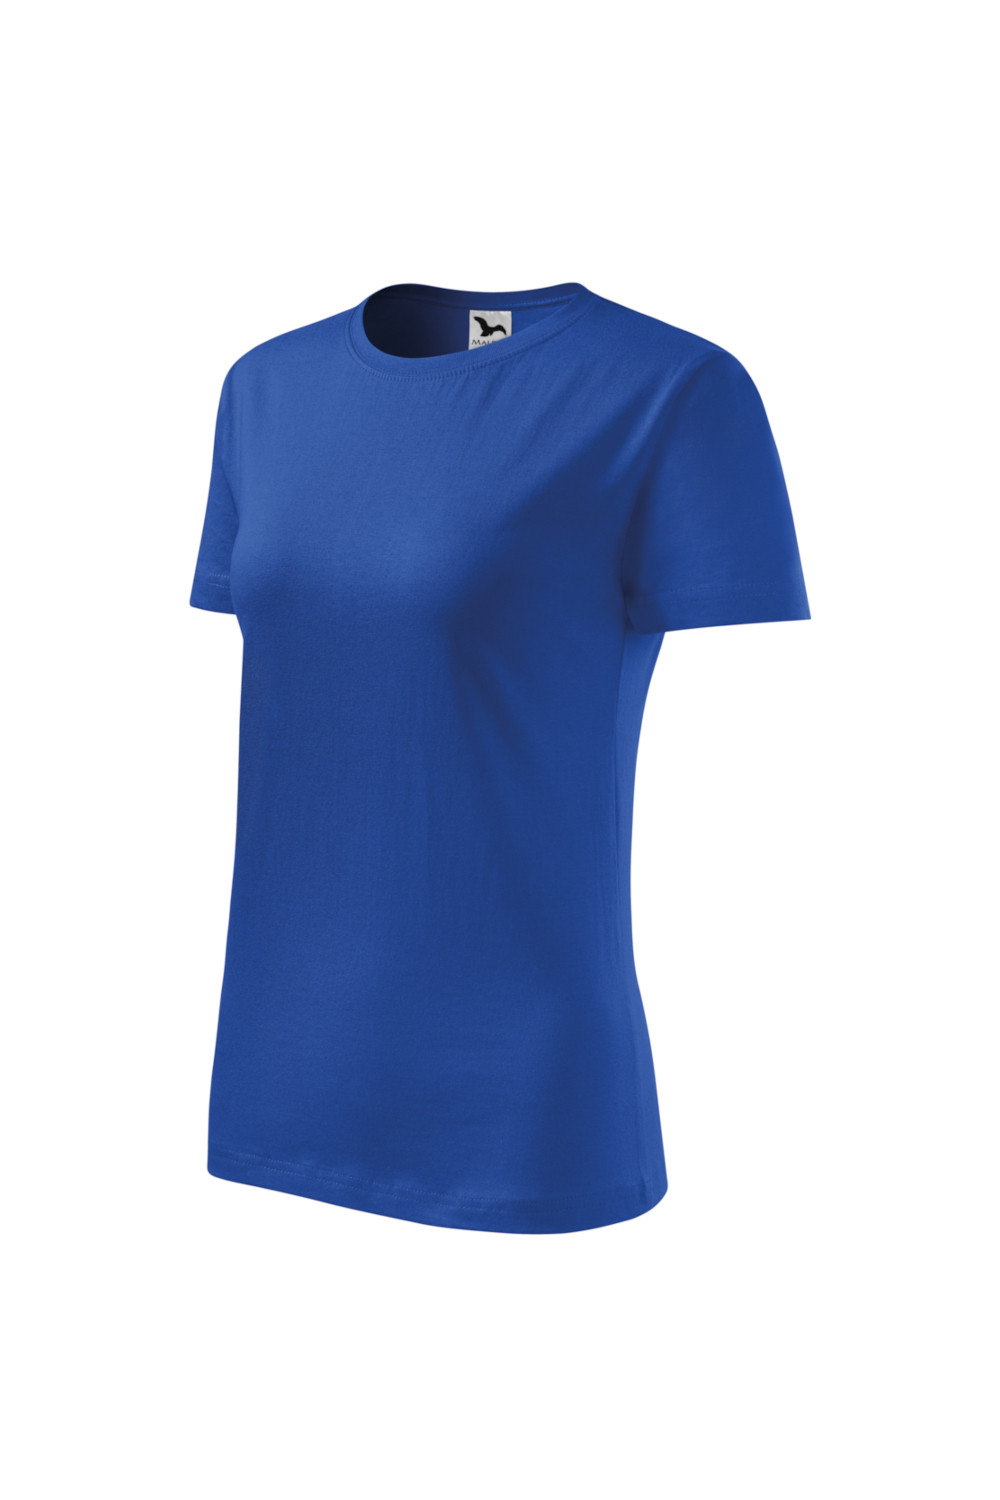 CLASSIC 133 MALFINI Koszulka damska 100% bawełna t-shirt szafir